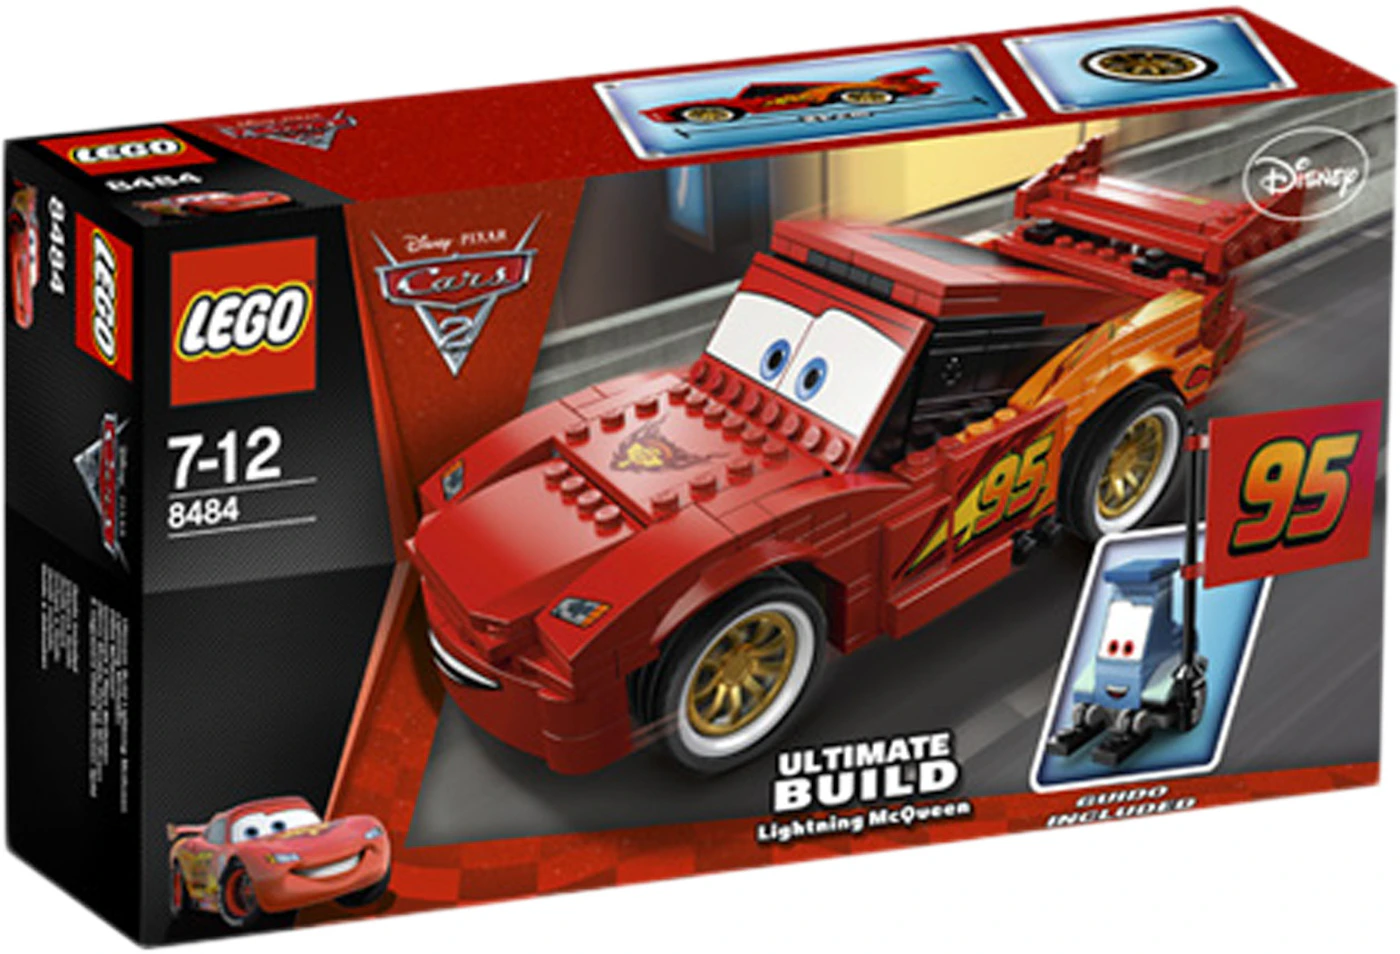 LEGO Cars 2 Ultimate Build Lightning McQueen Set 8484 - US